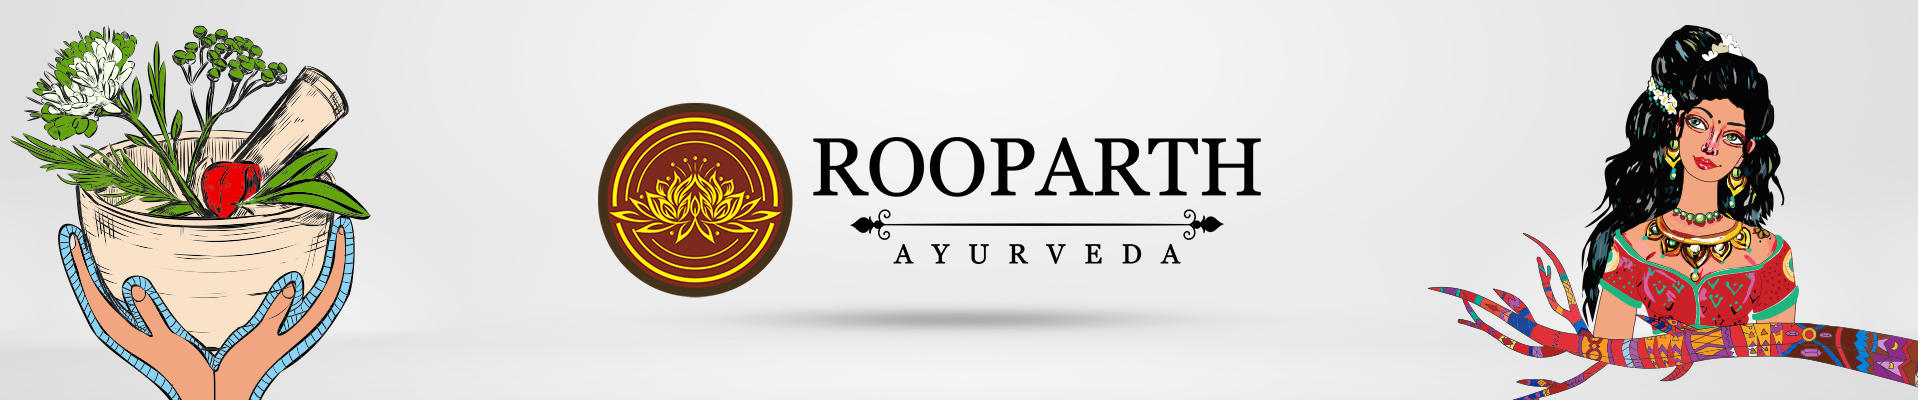 Brand-Banner-Rooparth